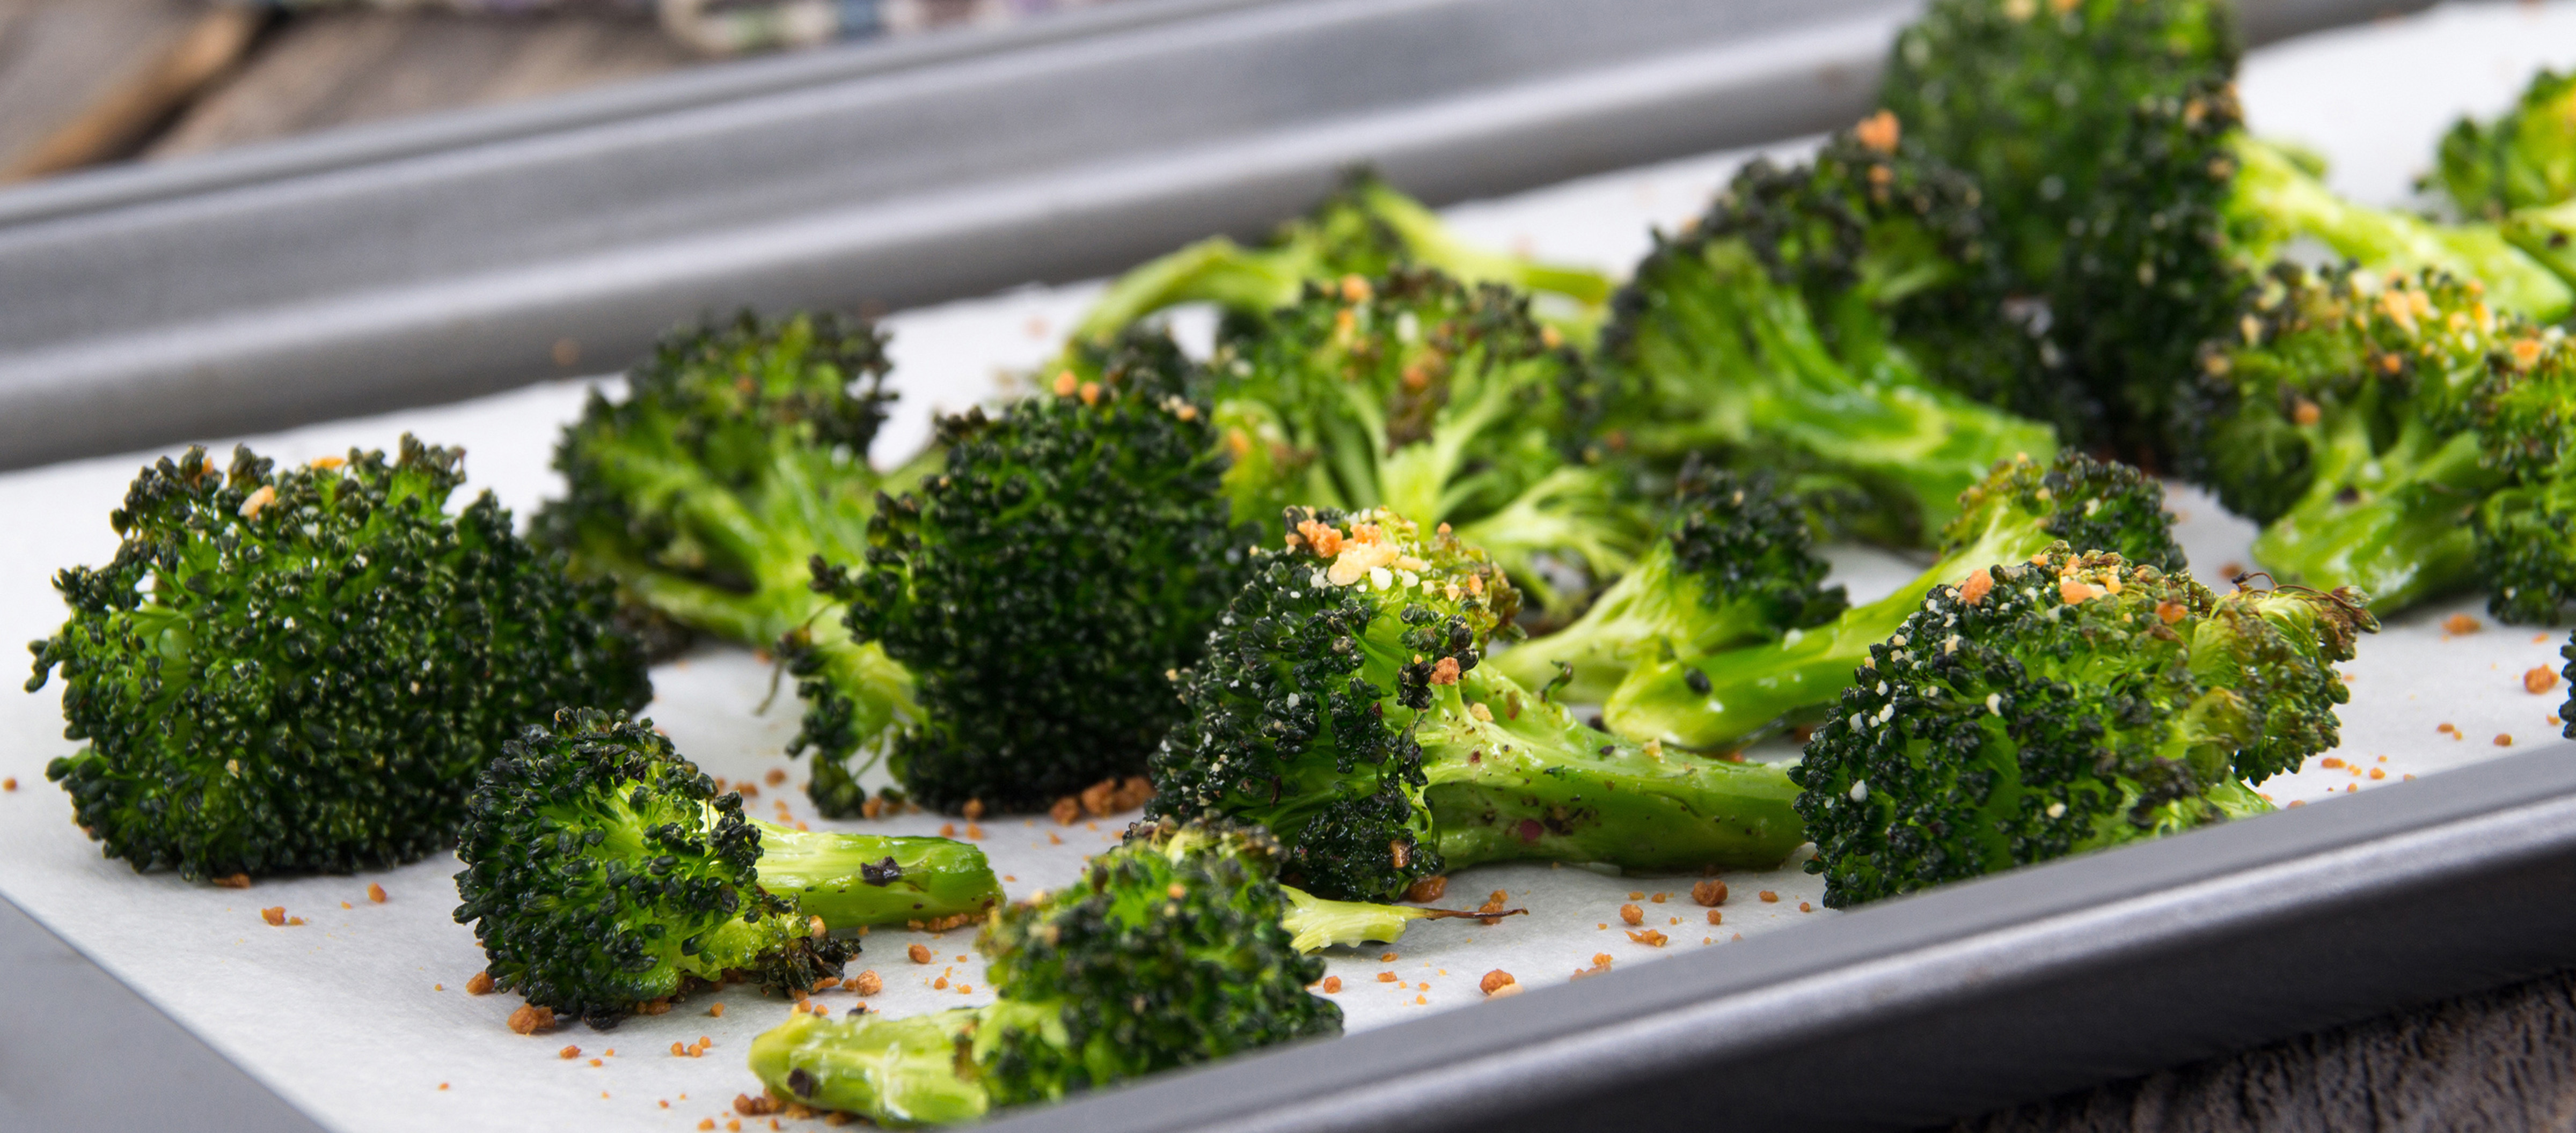 Image of Parmesan Herb Roasted Broccoli